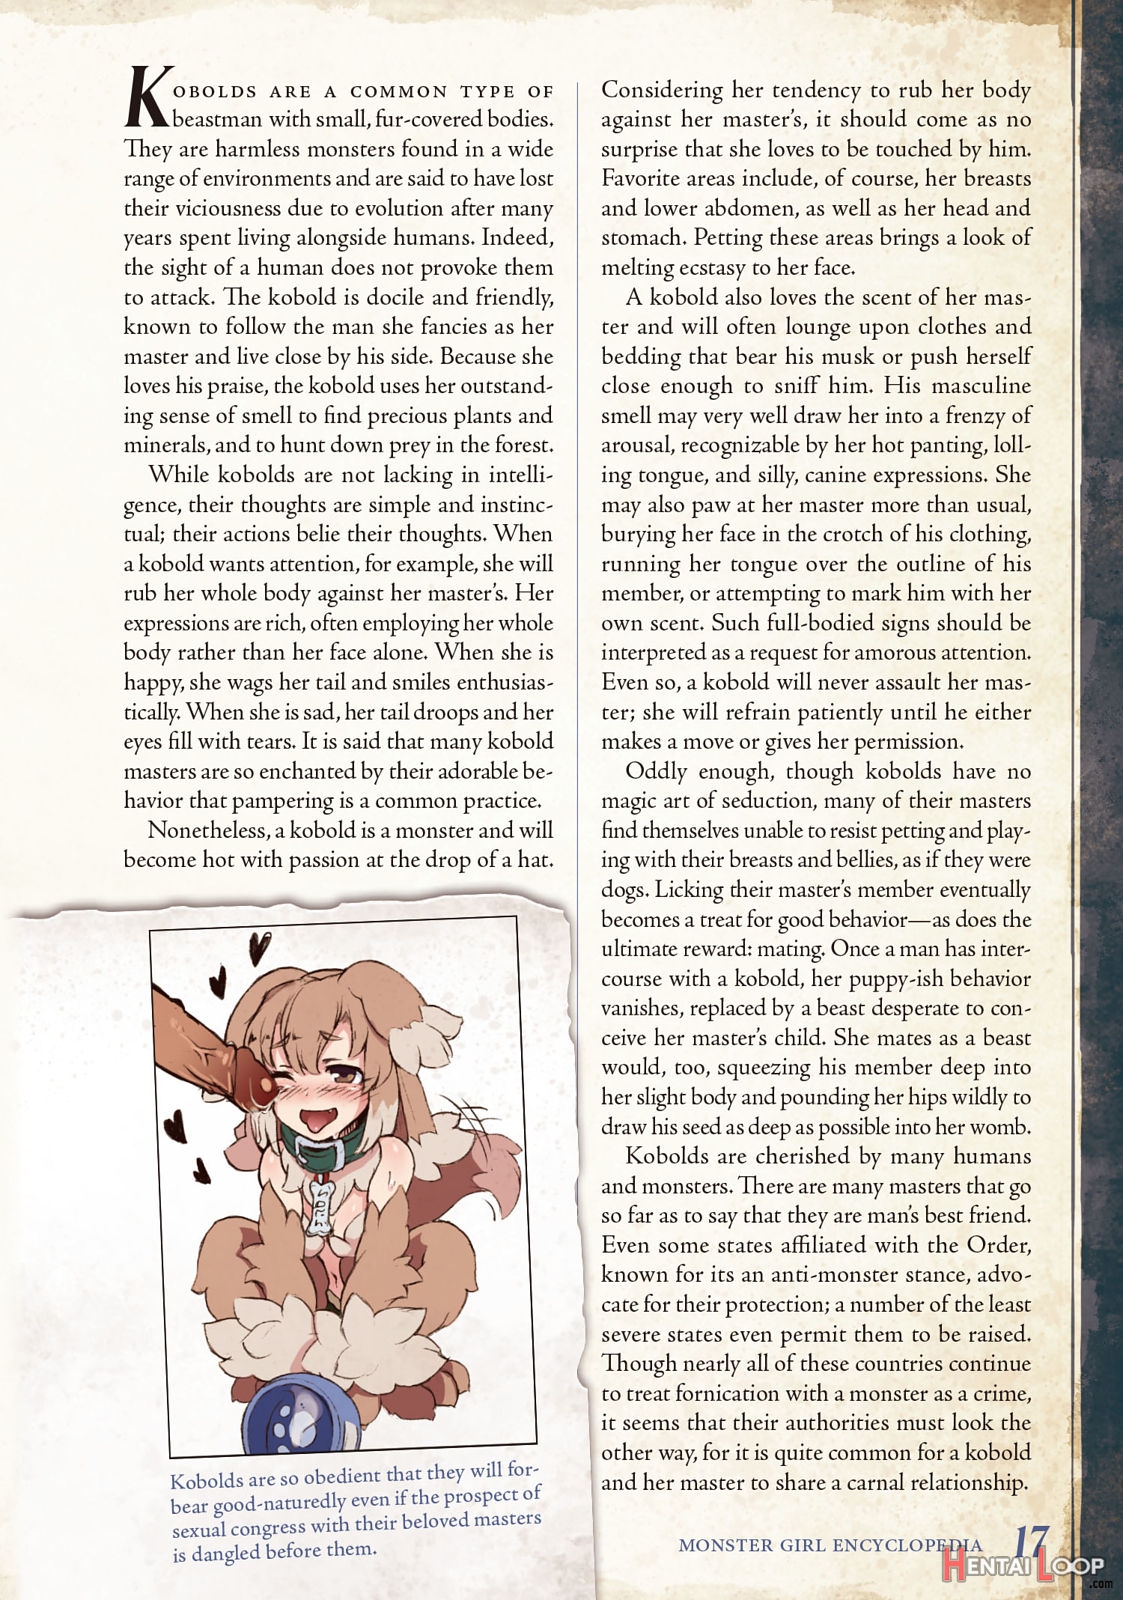 Monster Girl Encyclopedia Vol. 2 page 18